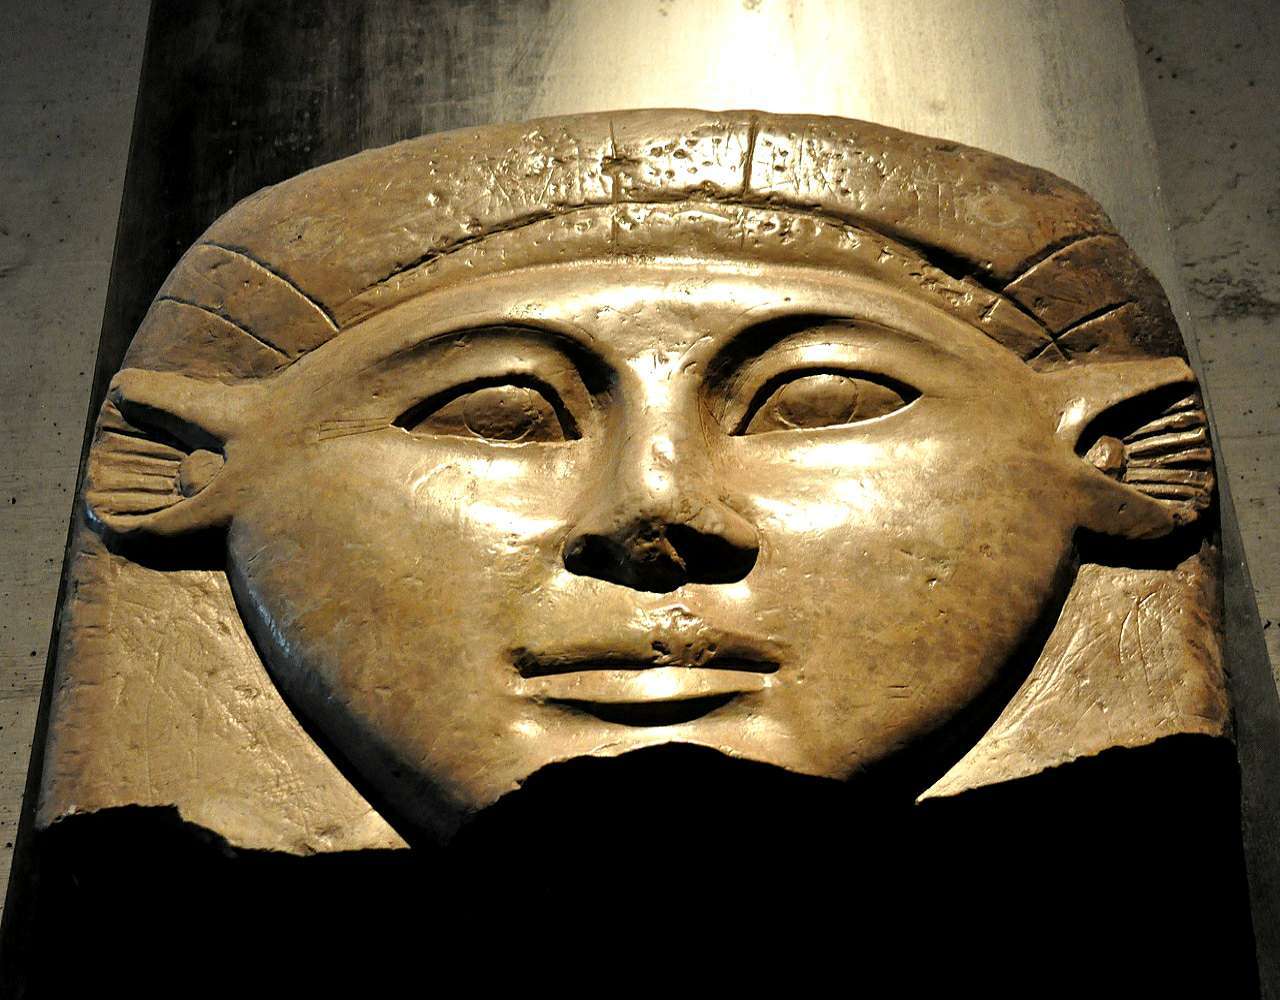 hlava bohyne Hathor, z Egypta